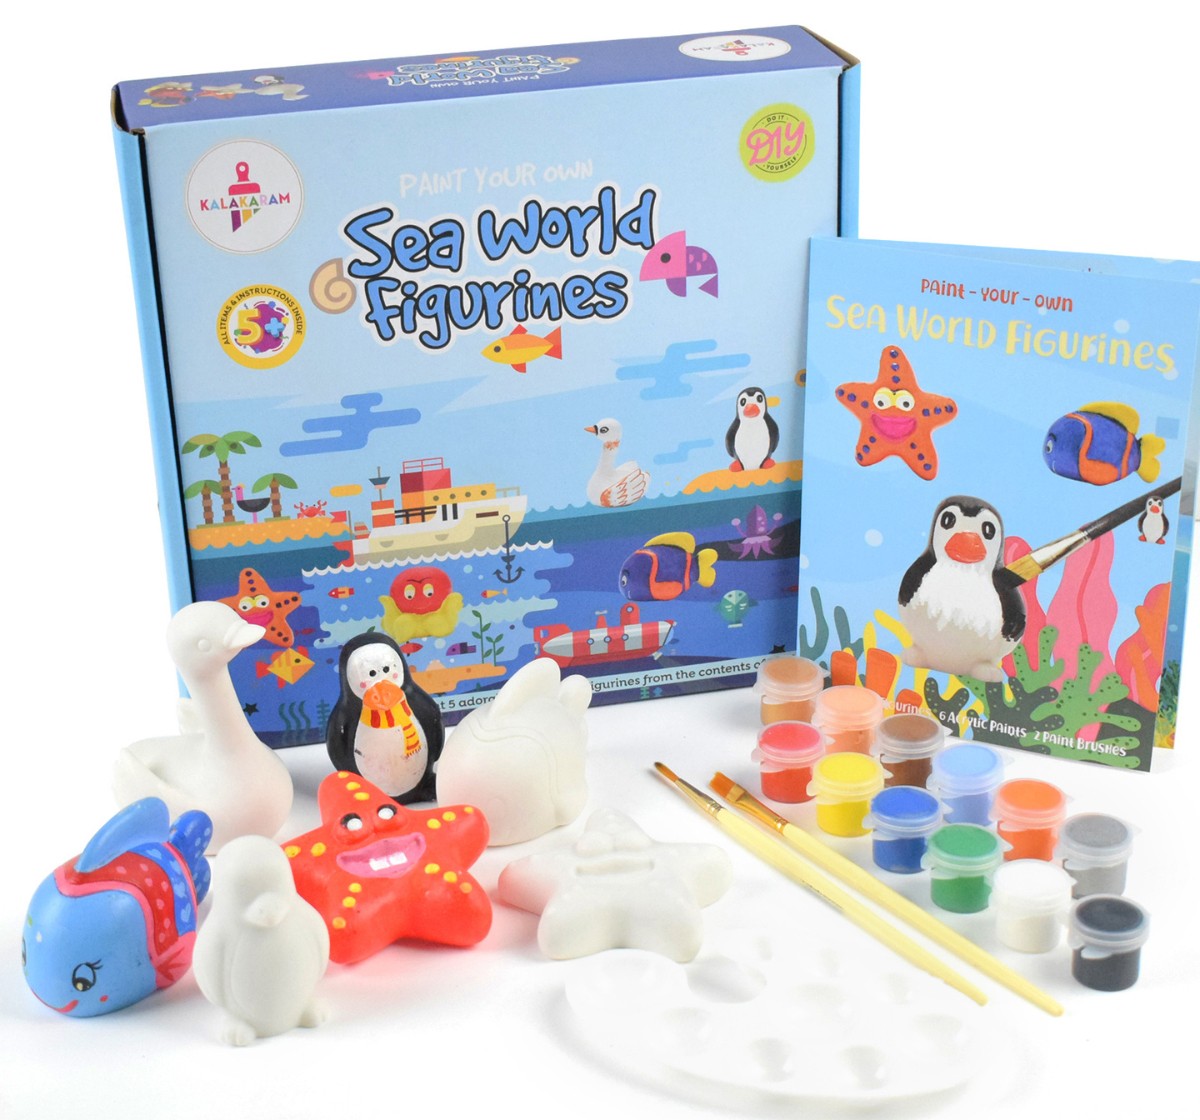 Kalakaram Sea World Figurine Painting Kit, Paint 5 Sea World Animals with this Kit, Kids Painting Kit, 5Y+, Multicolour